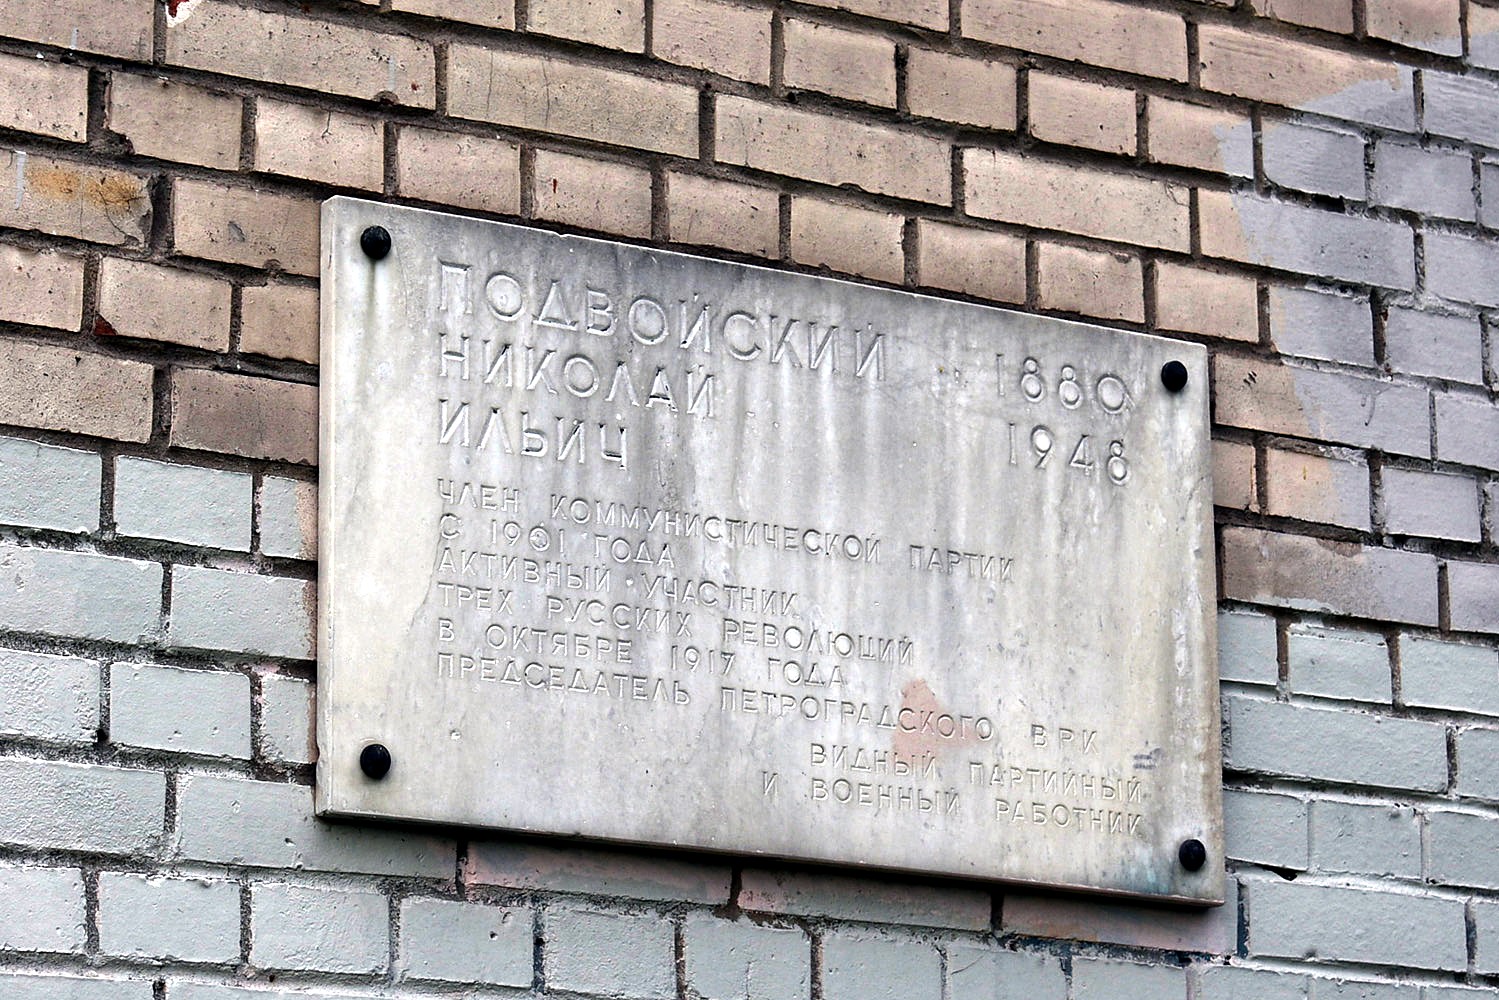 Petersburg, Искровский проспект, 14. Petersburg — Memorial plaques